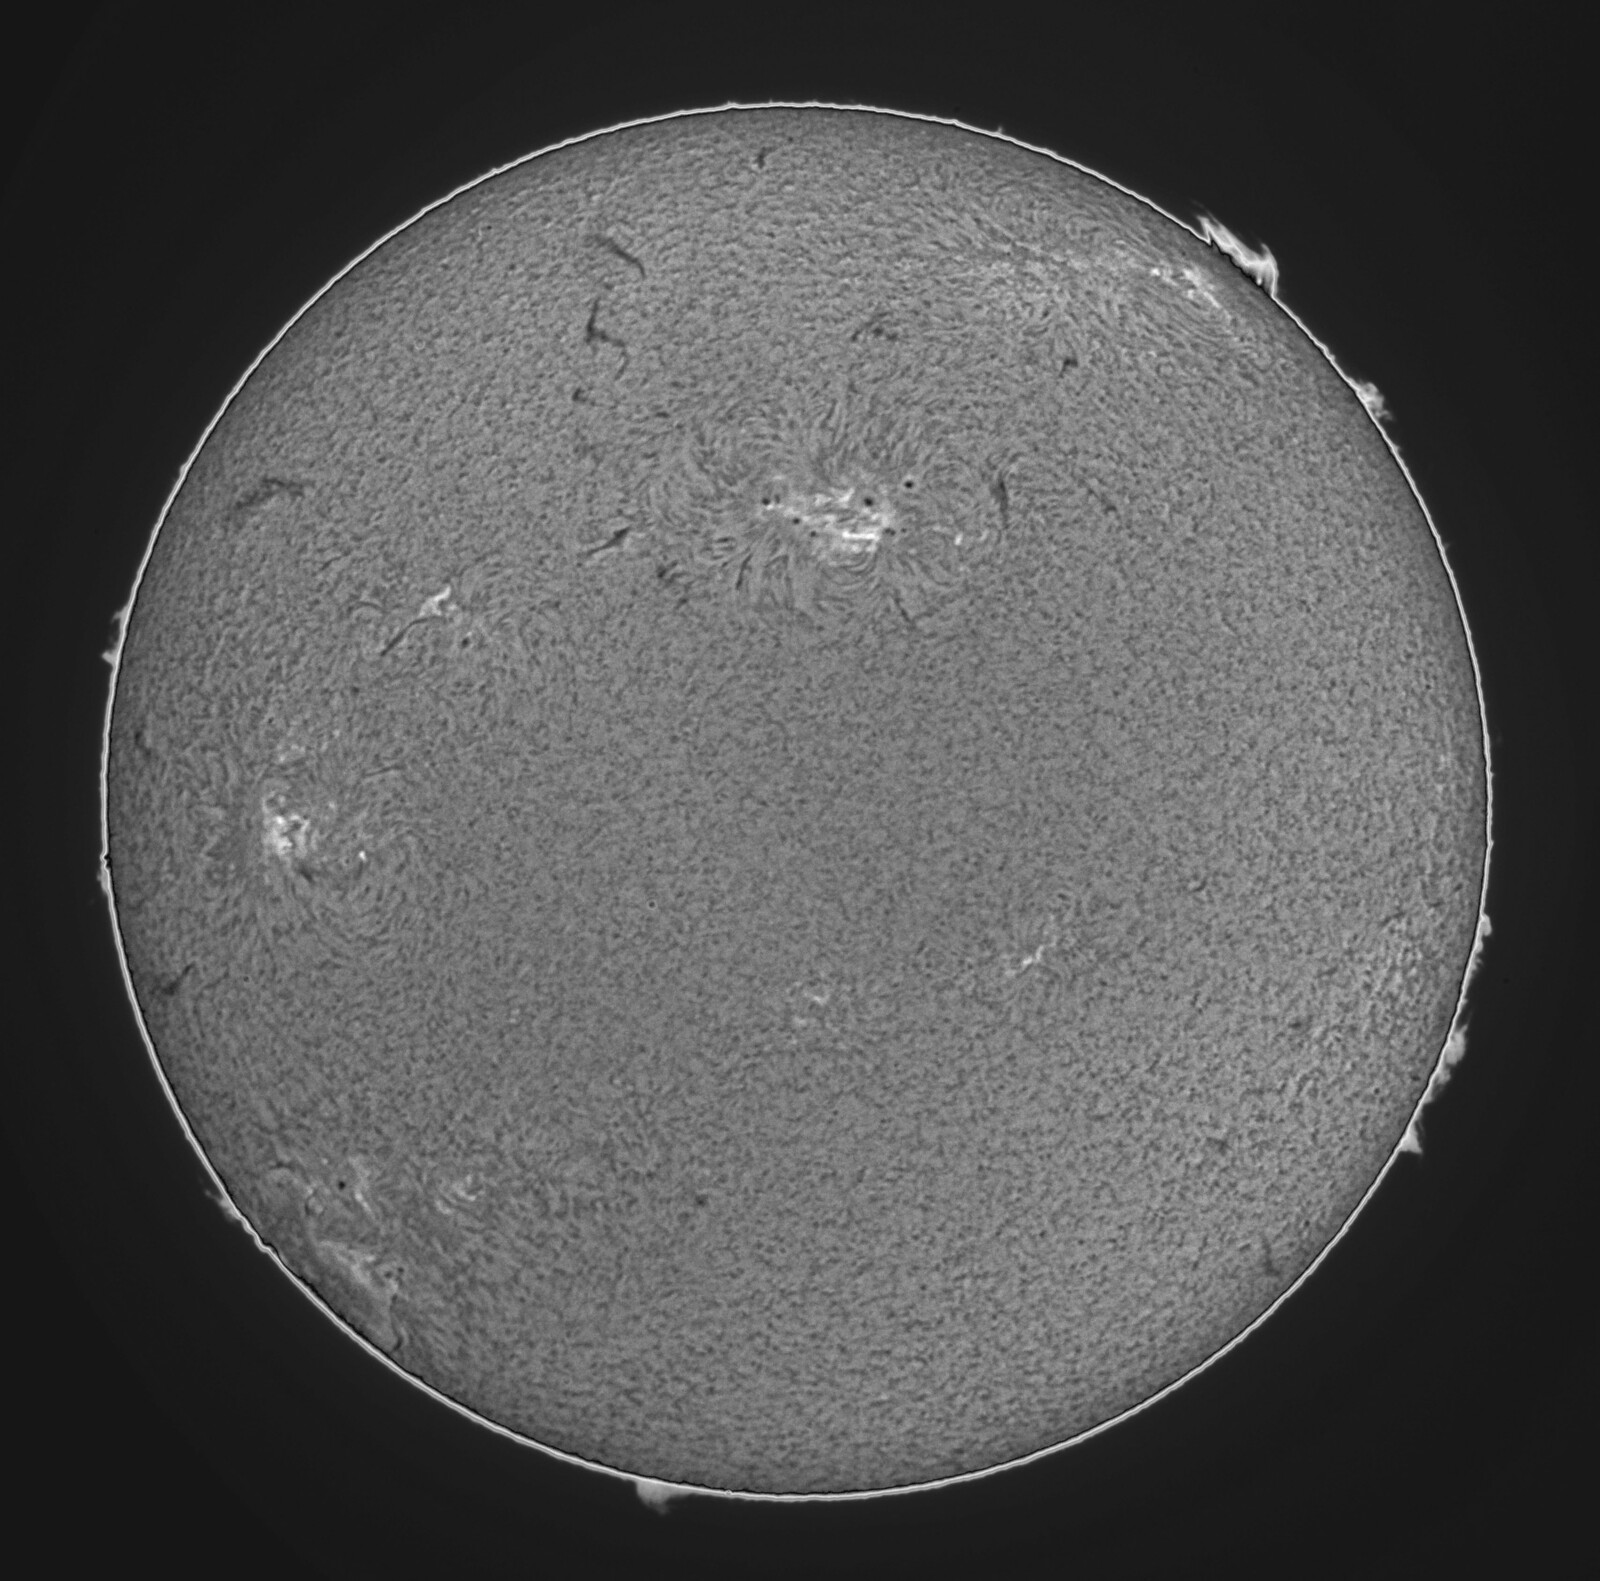 H-alpha Sun May 15, 2022 Moore SC